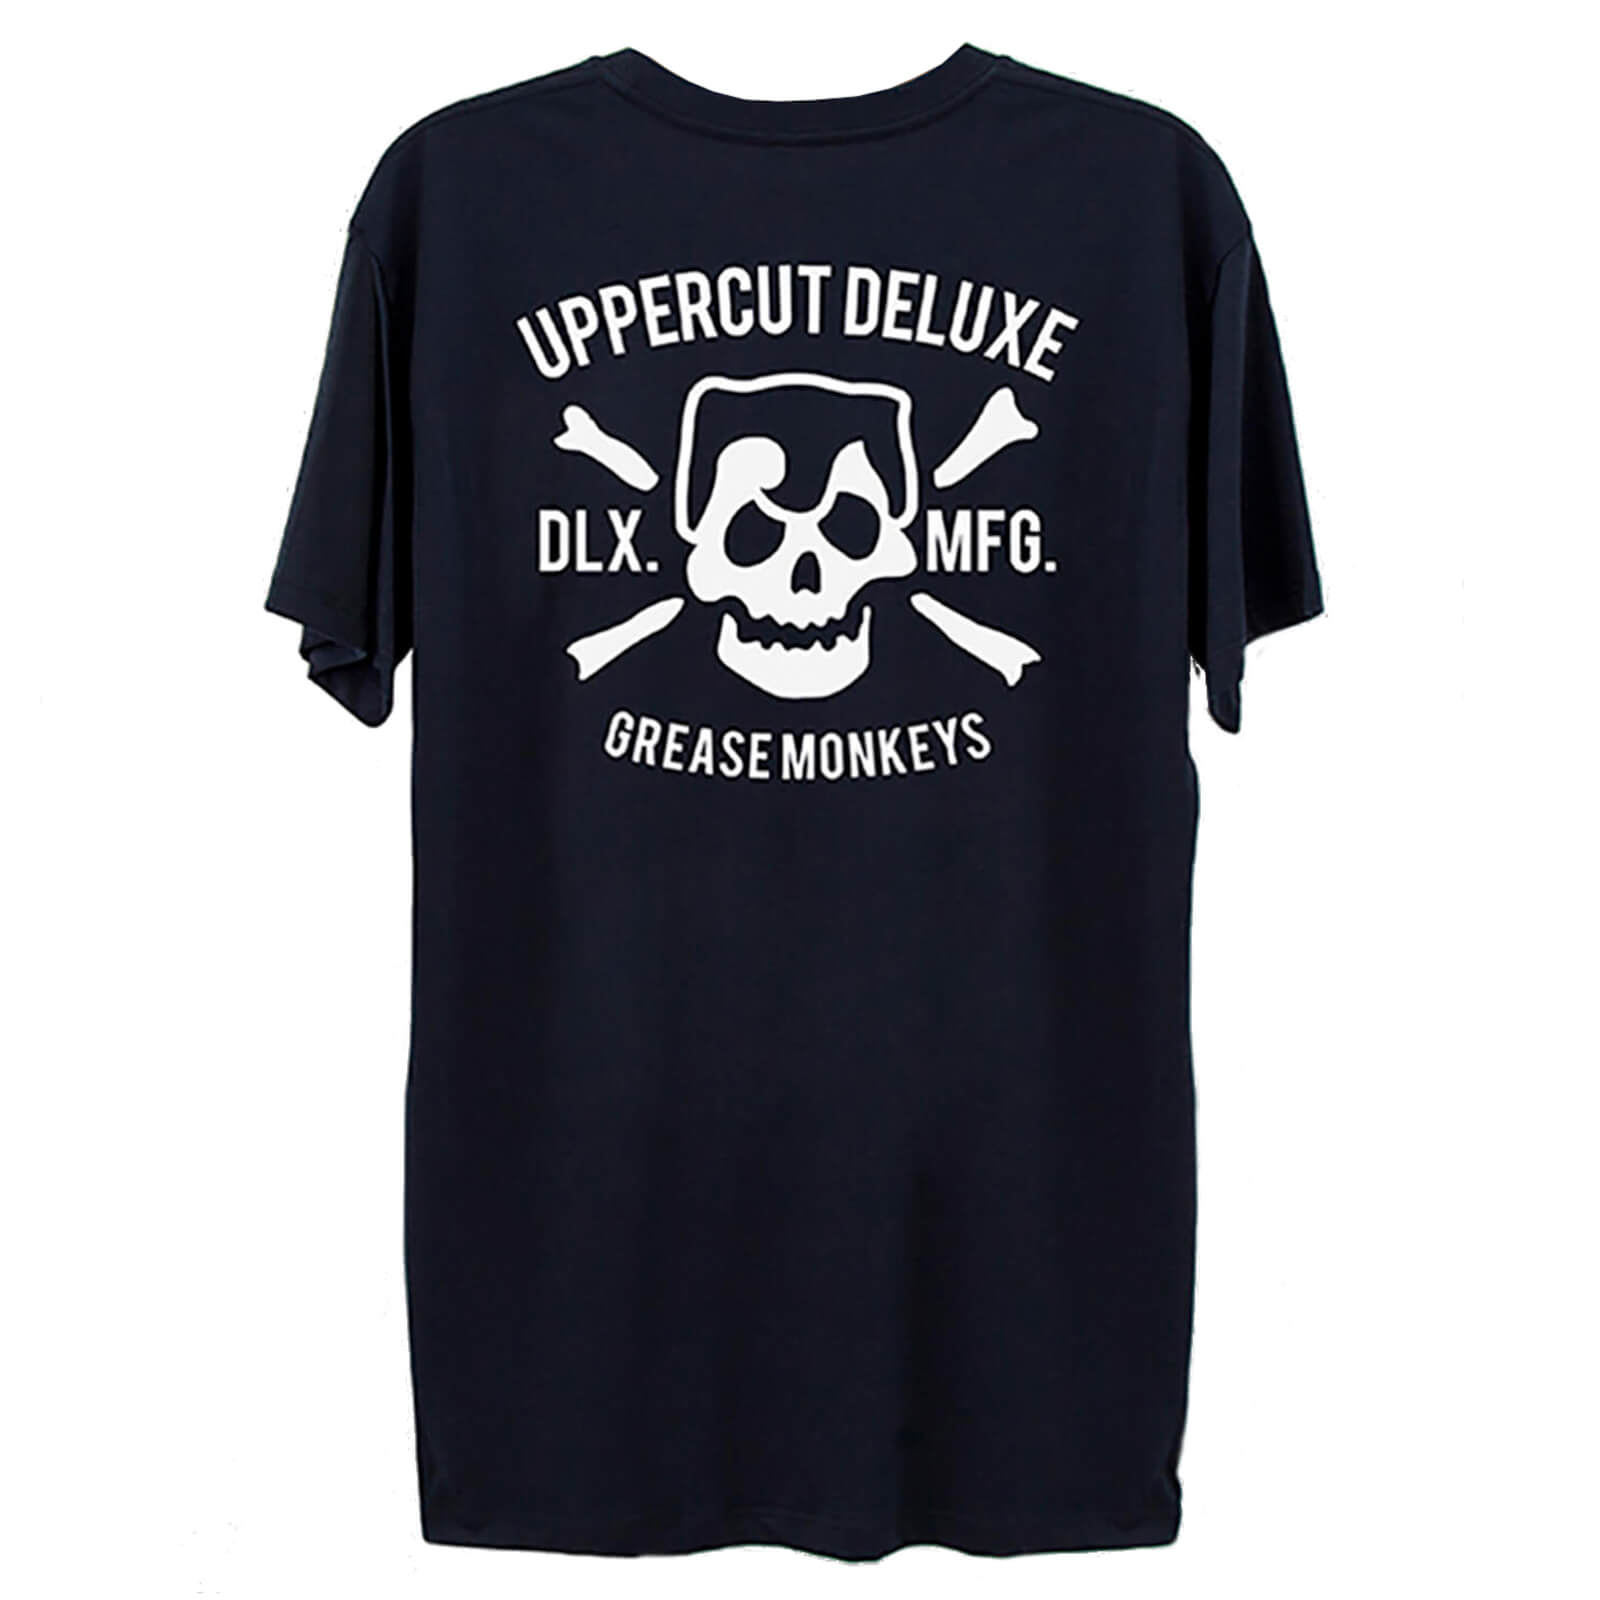 Uppercut Grease Monkey Lives T-Shirt – Navy/White Print – S lookfantastic.com imagine